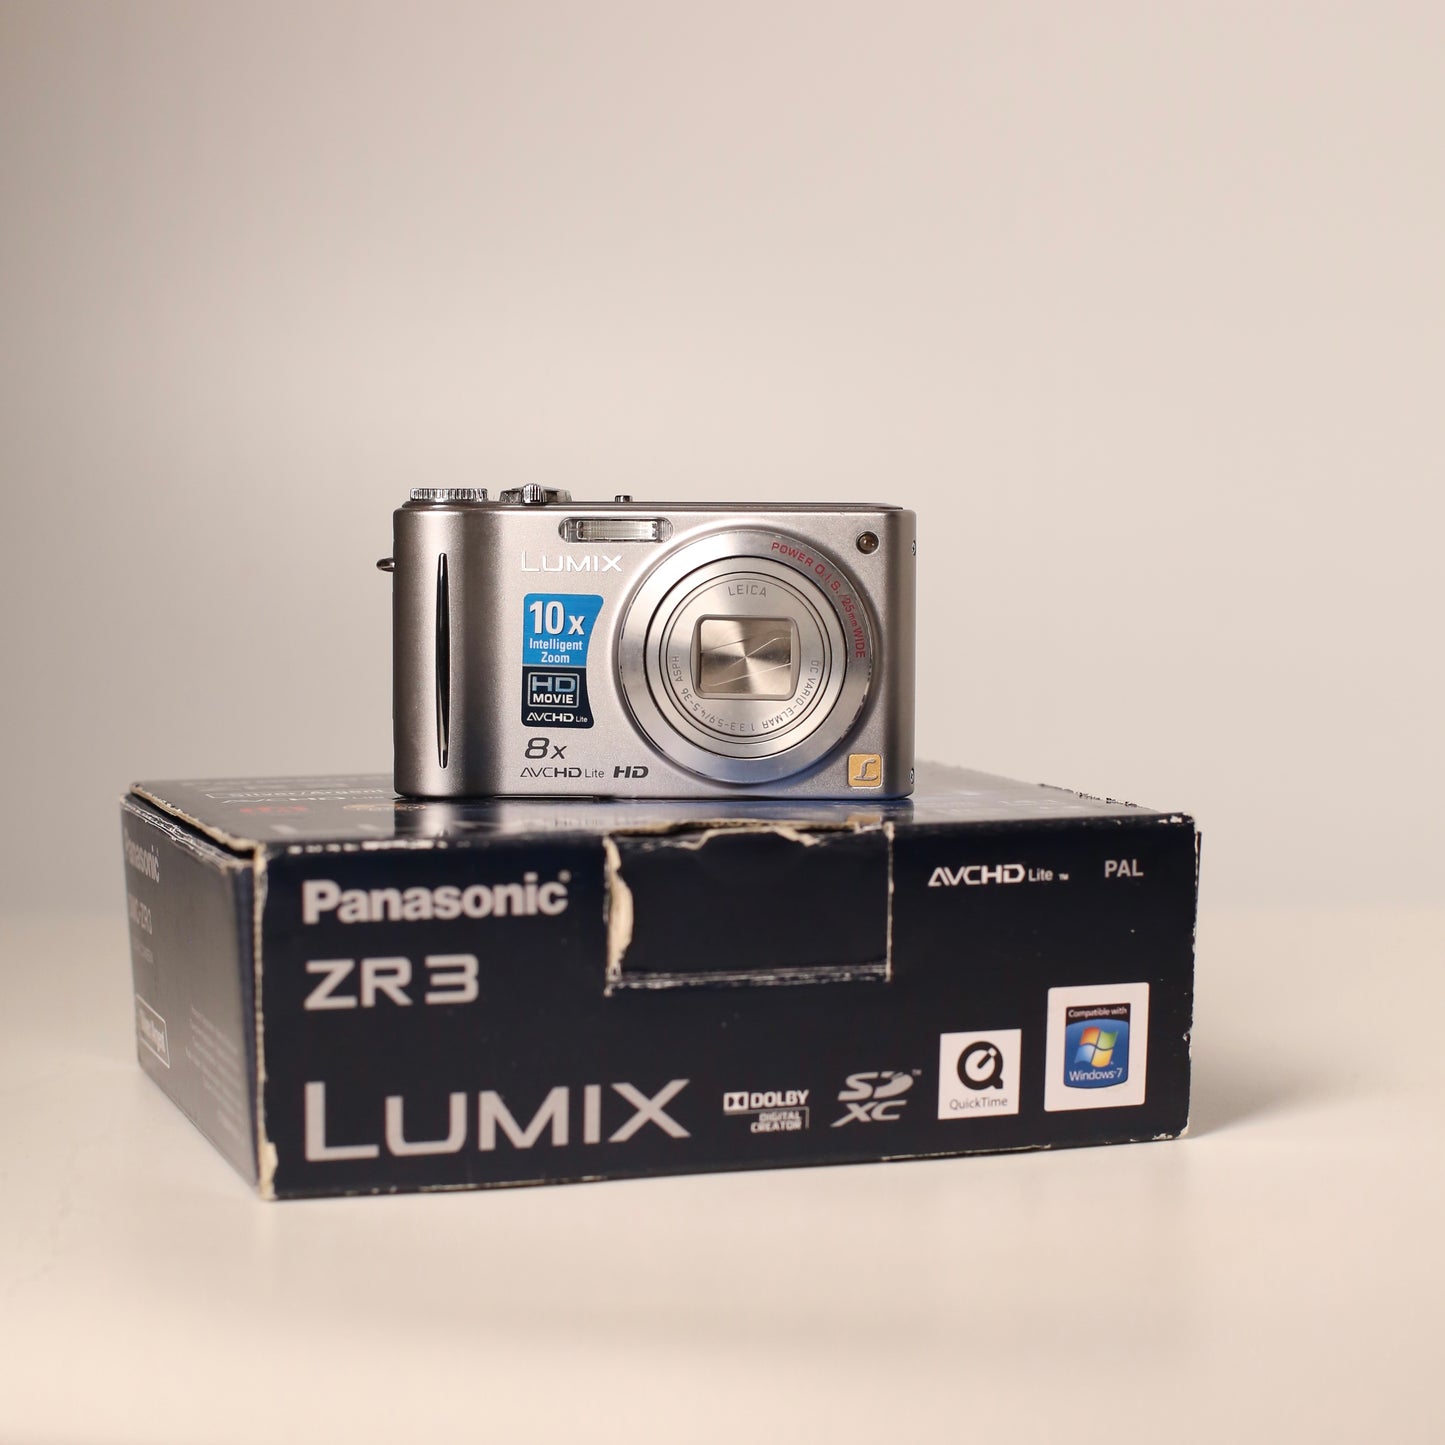 [NEW OLD STOCK] Panasonic Lumix ZR3